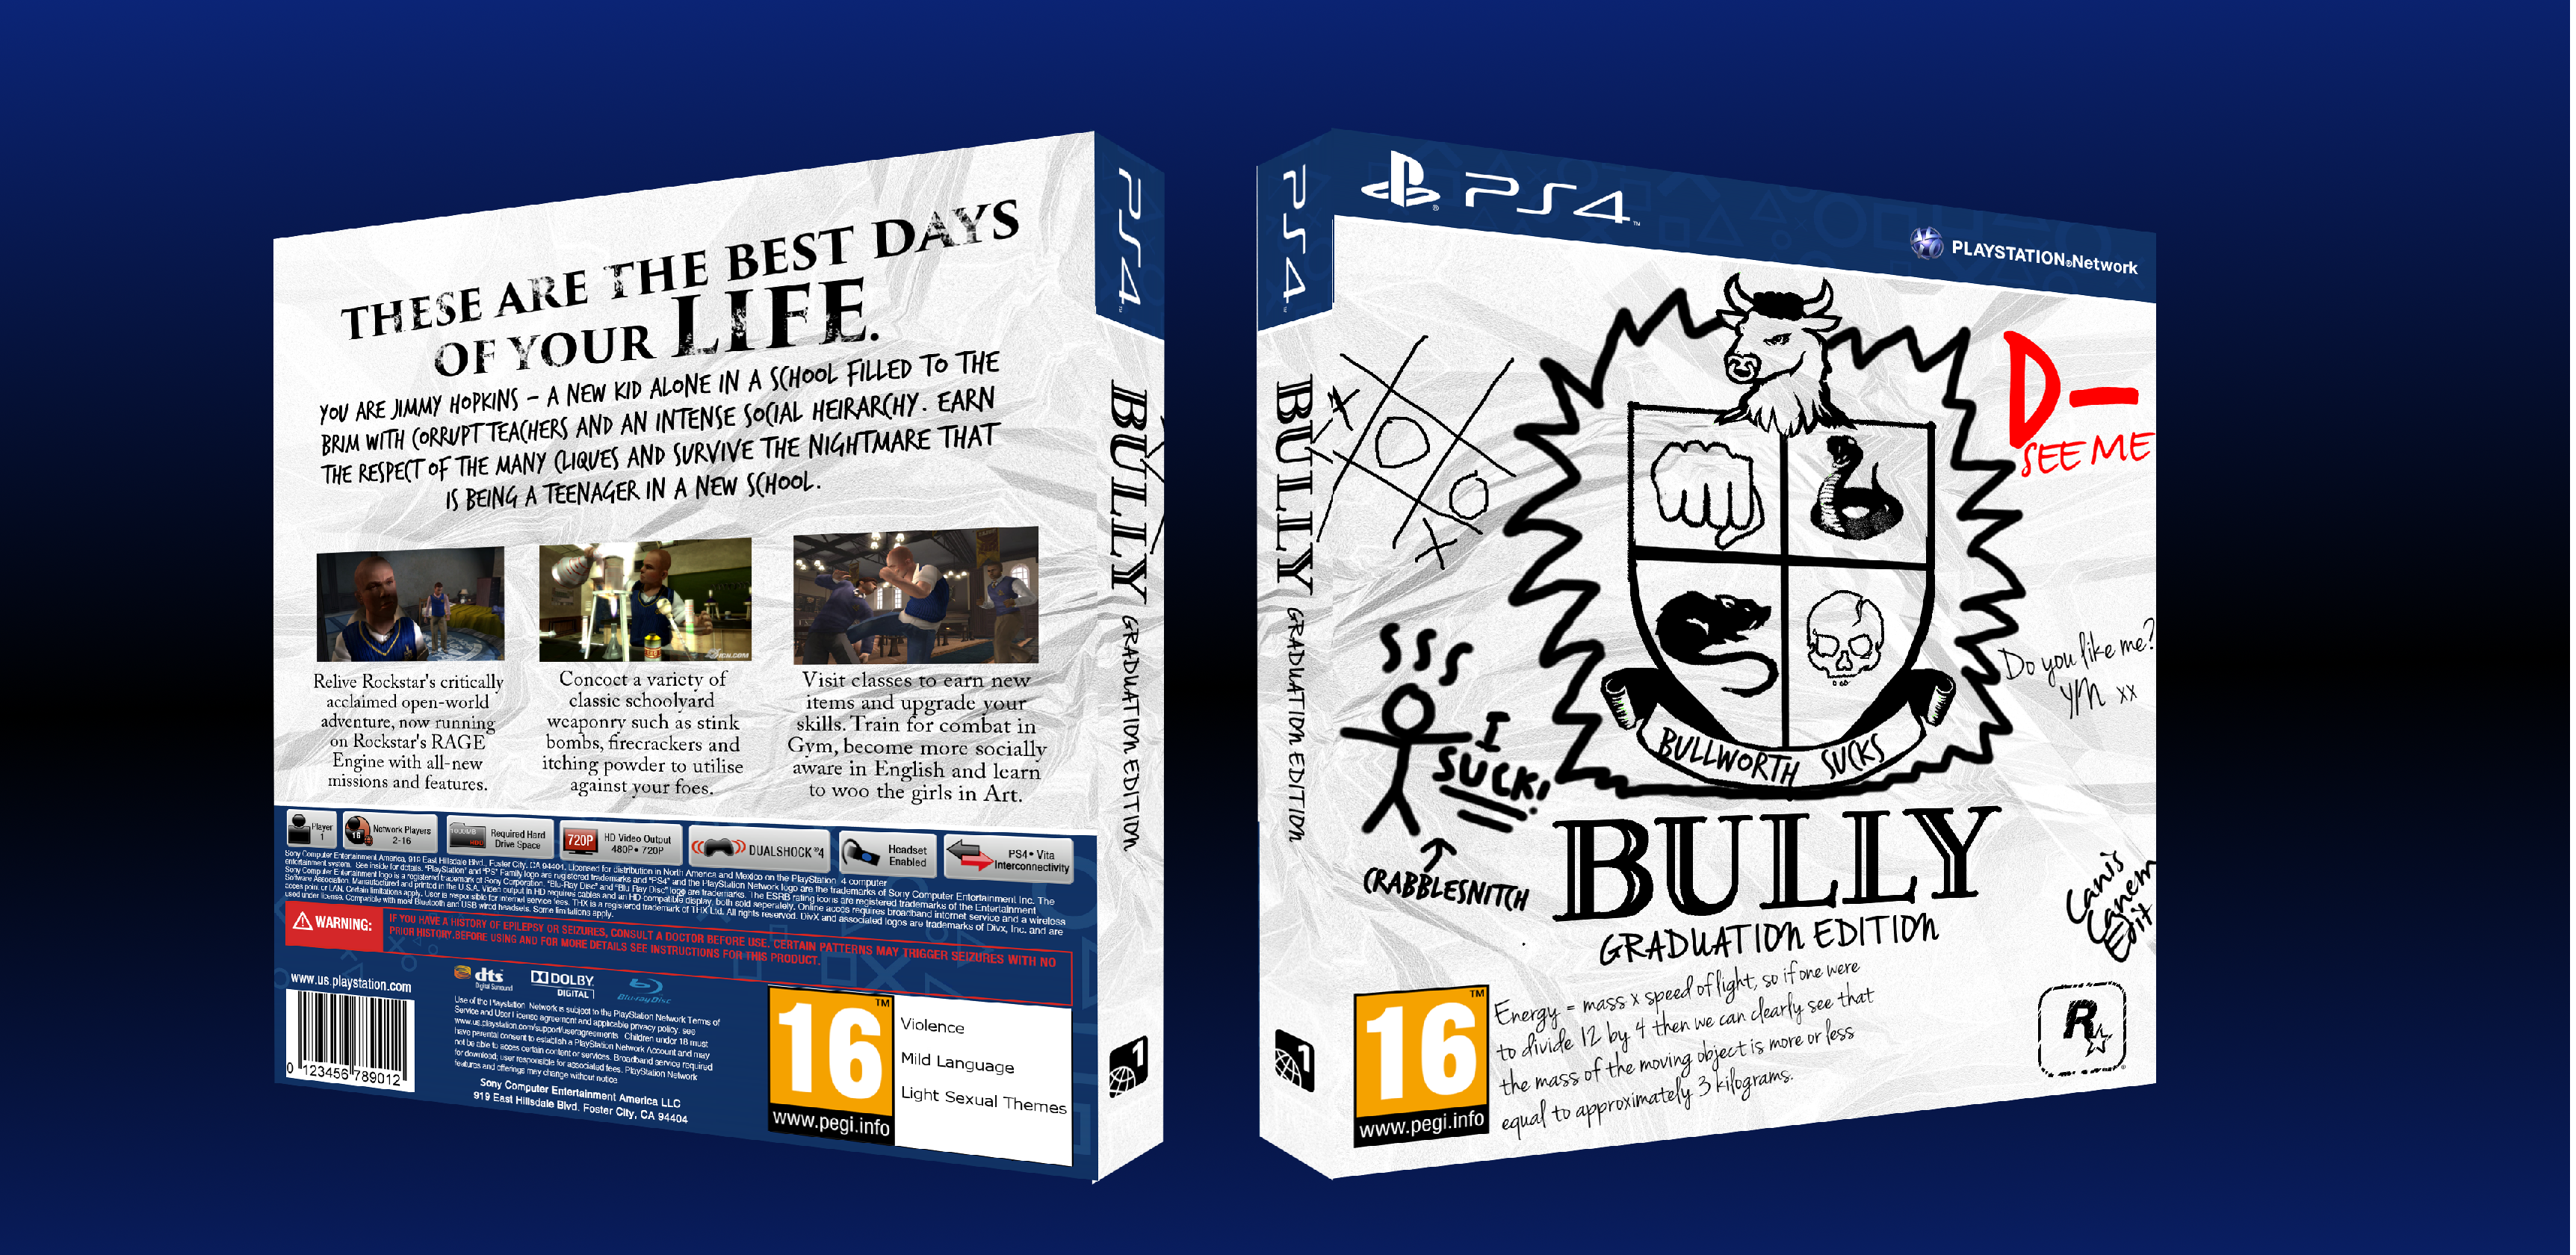 Bully: Graduation Edition box cover